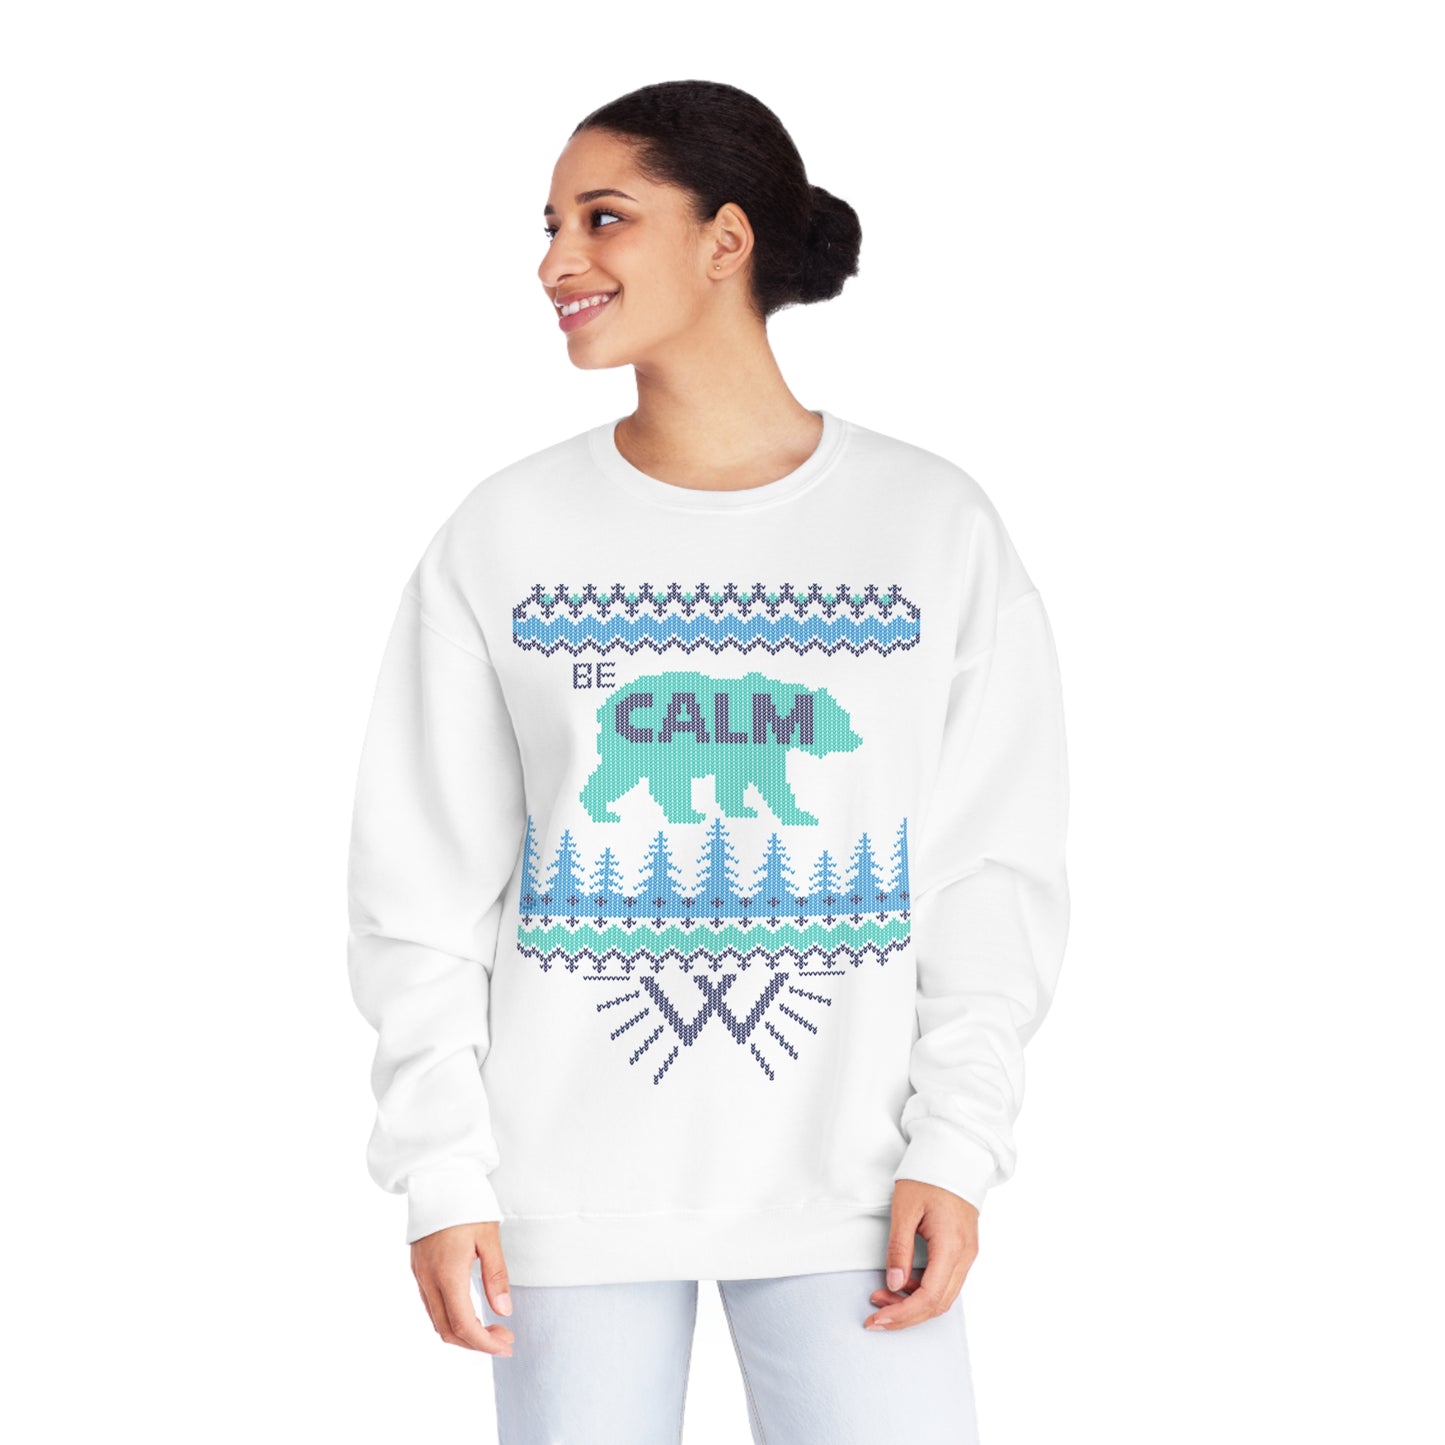 Walden "Calm for the Holidays" Seasonal Sweatshirt